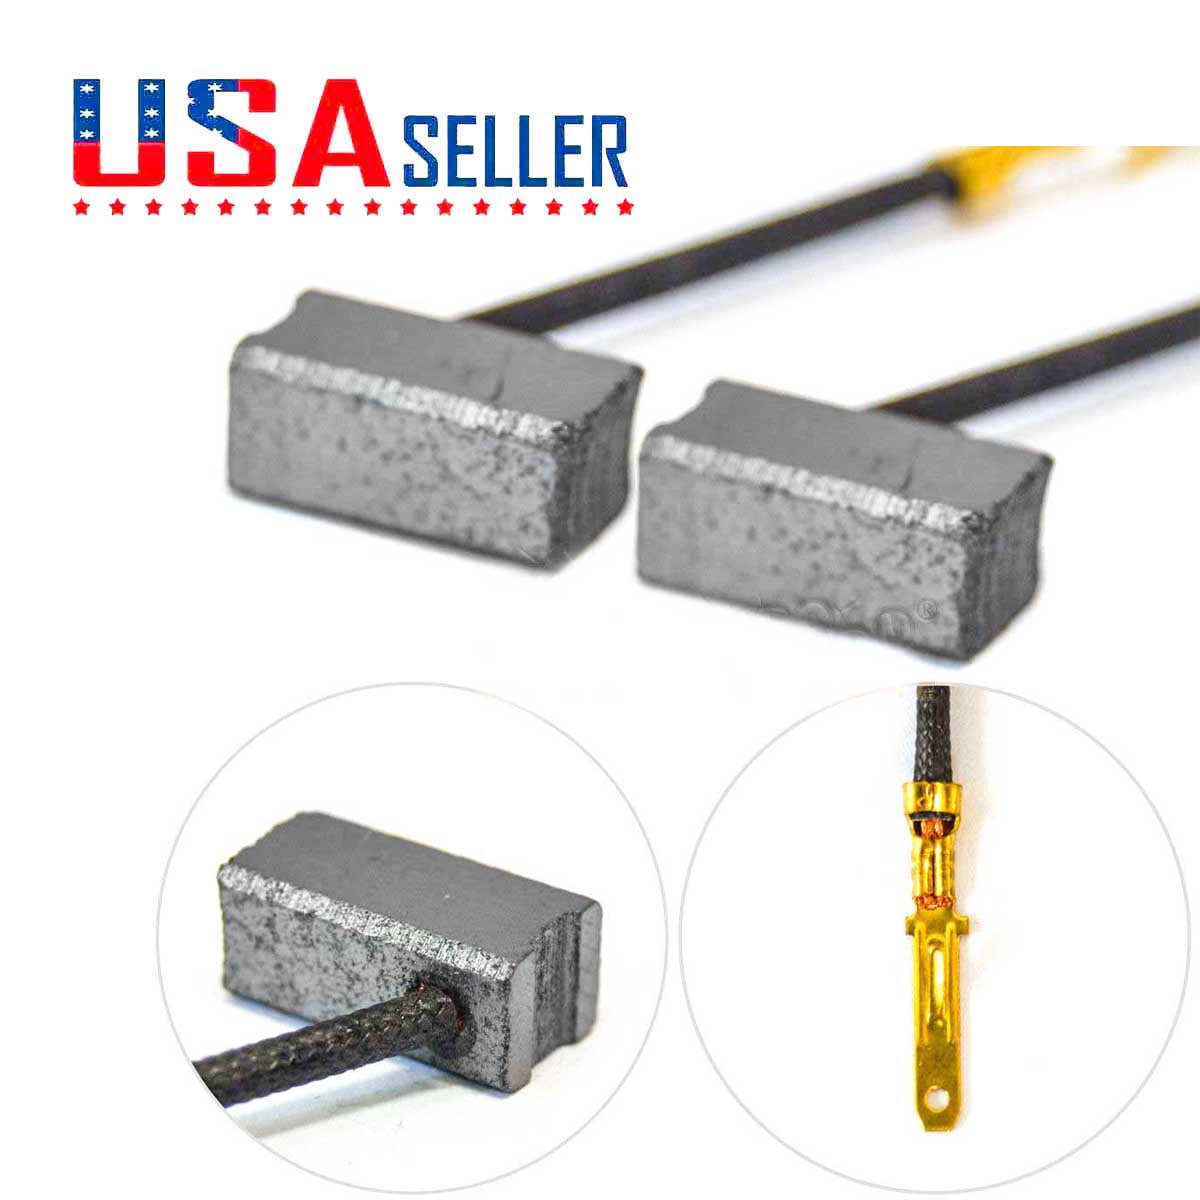 For Dewalt Porter cable Black and decker rep Carbon Brush Set rep 445861-25 US 